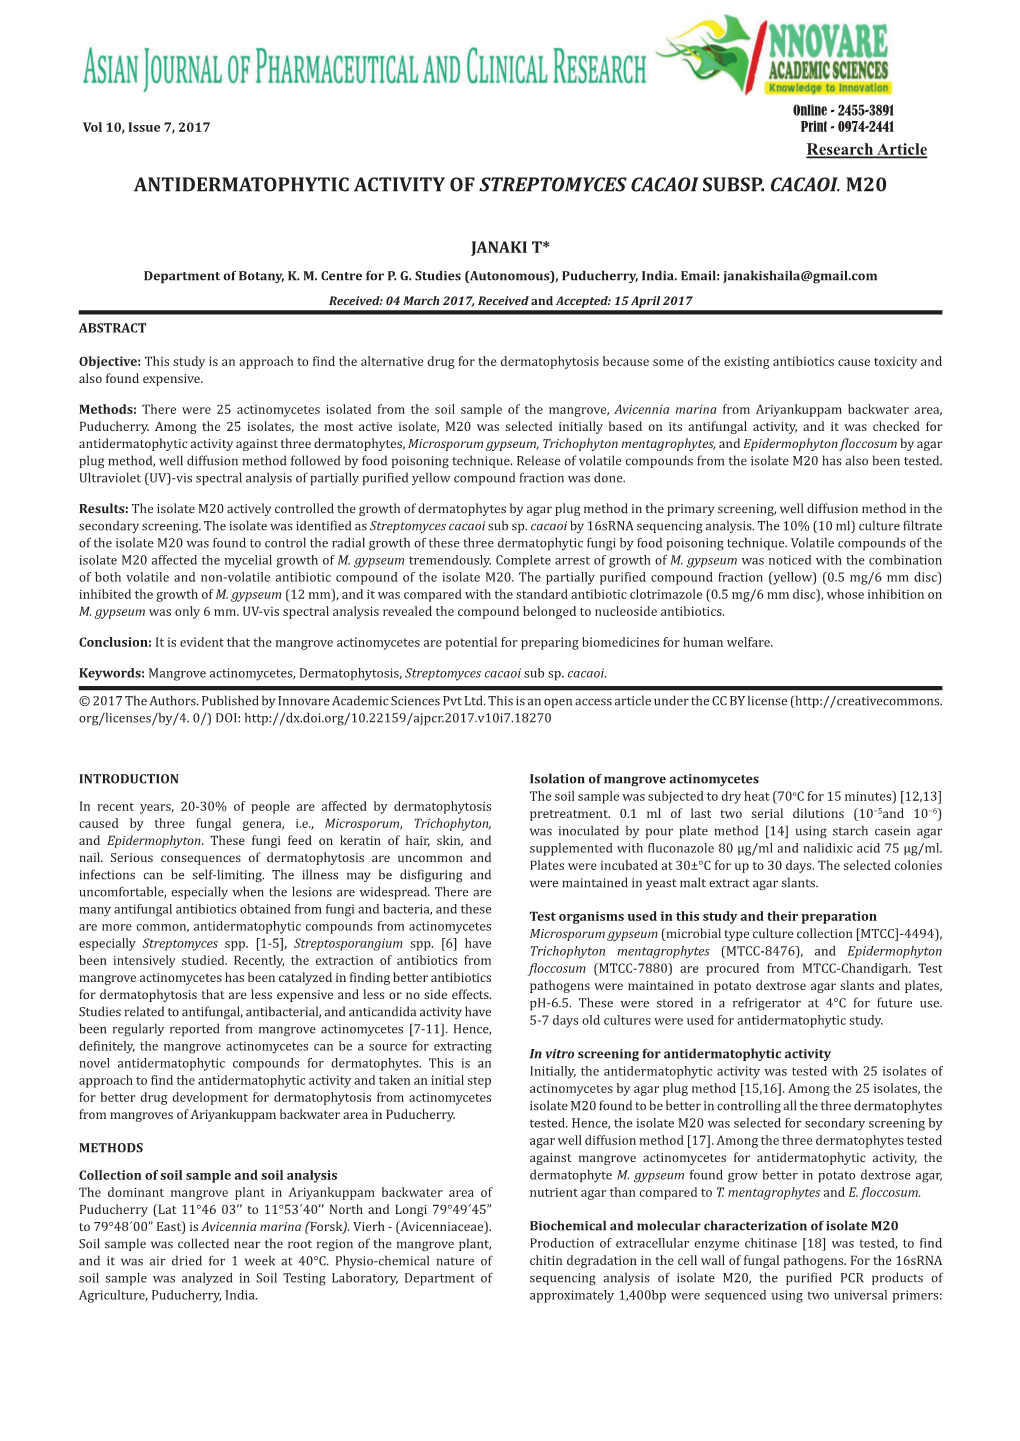 Antidermatophytic Activity of Streptomyces Cacaoi Subsp